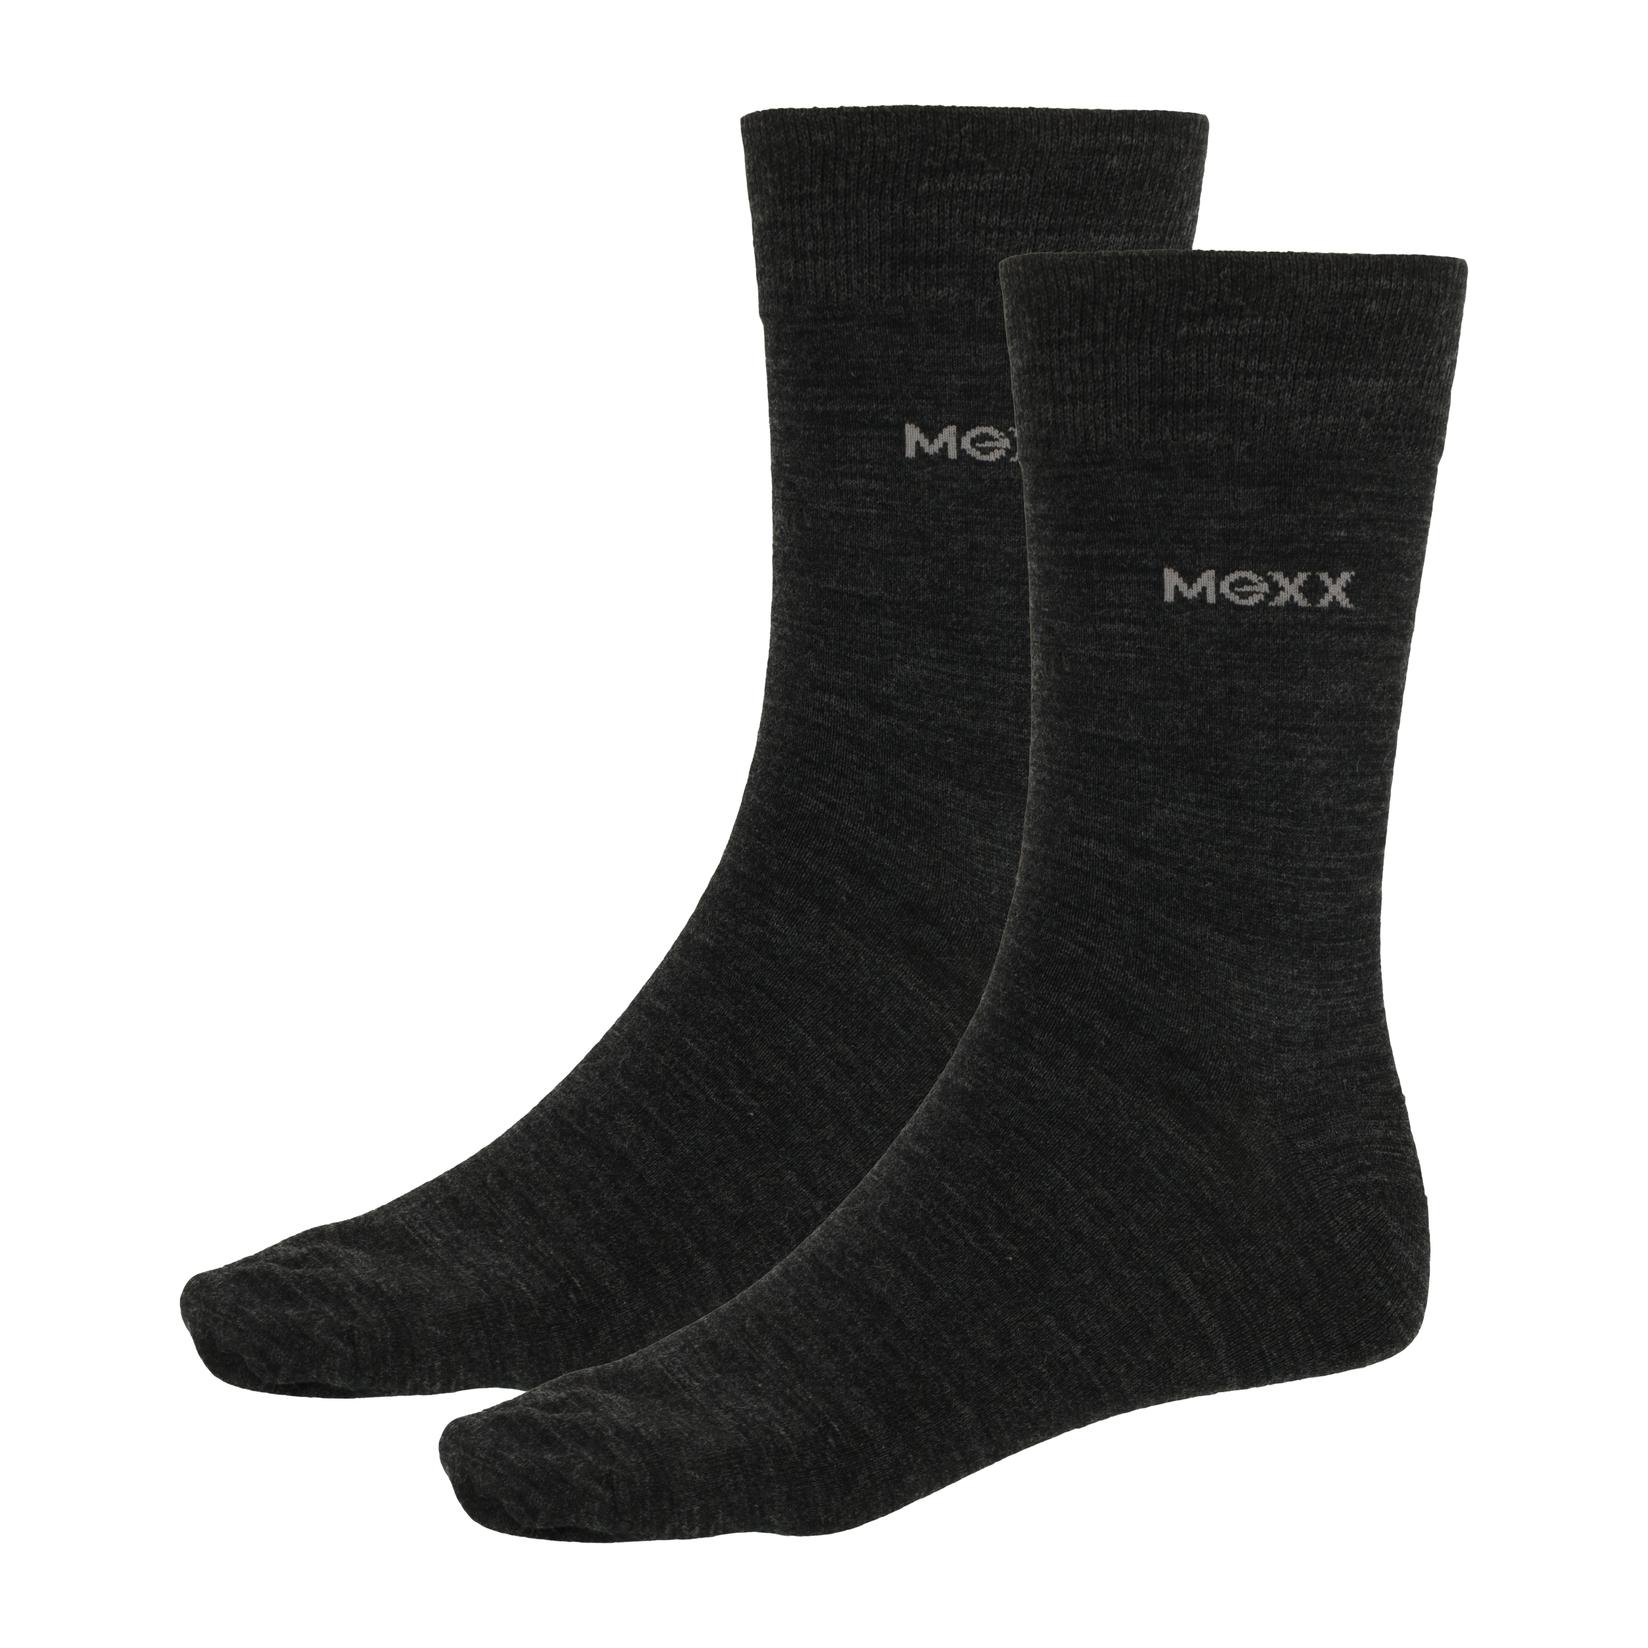 Selected image for MEXX Čarape od Merino vune Business, Pakovanje od 2 para, Sive